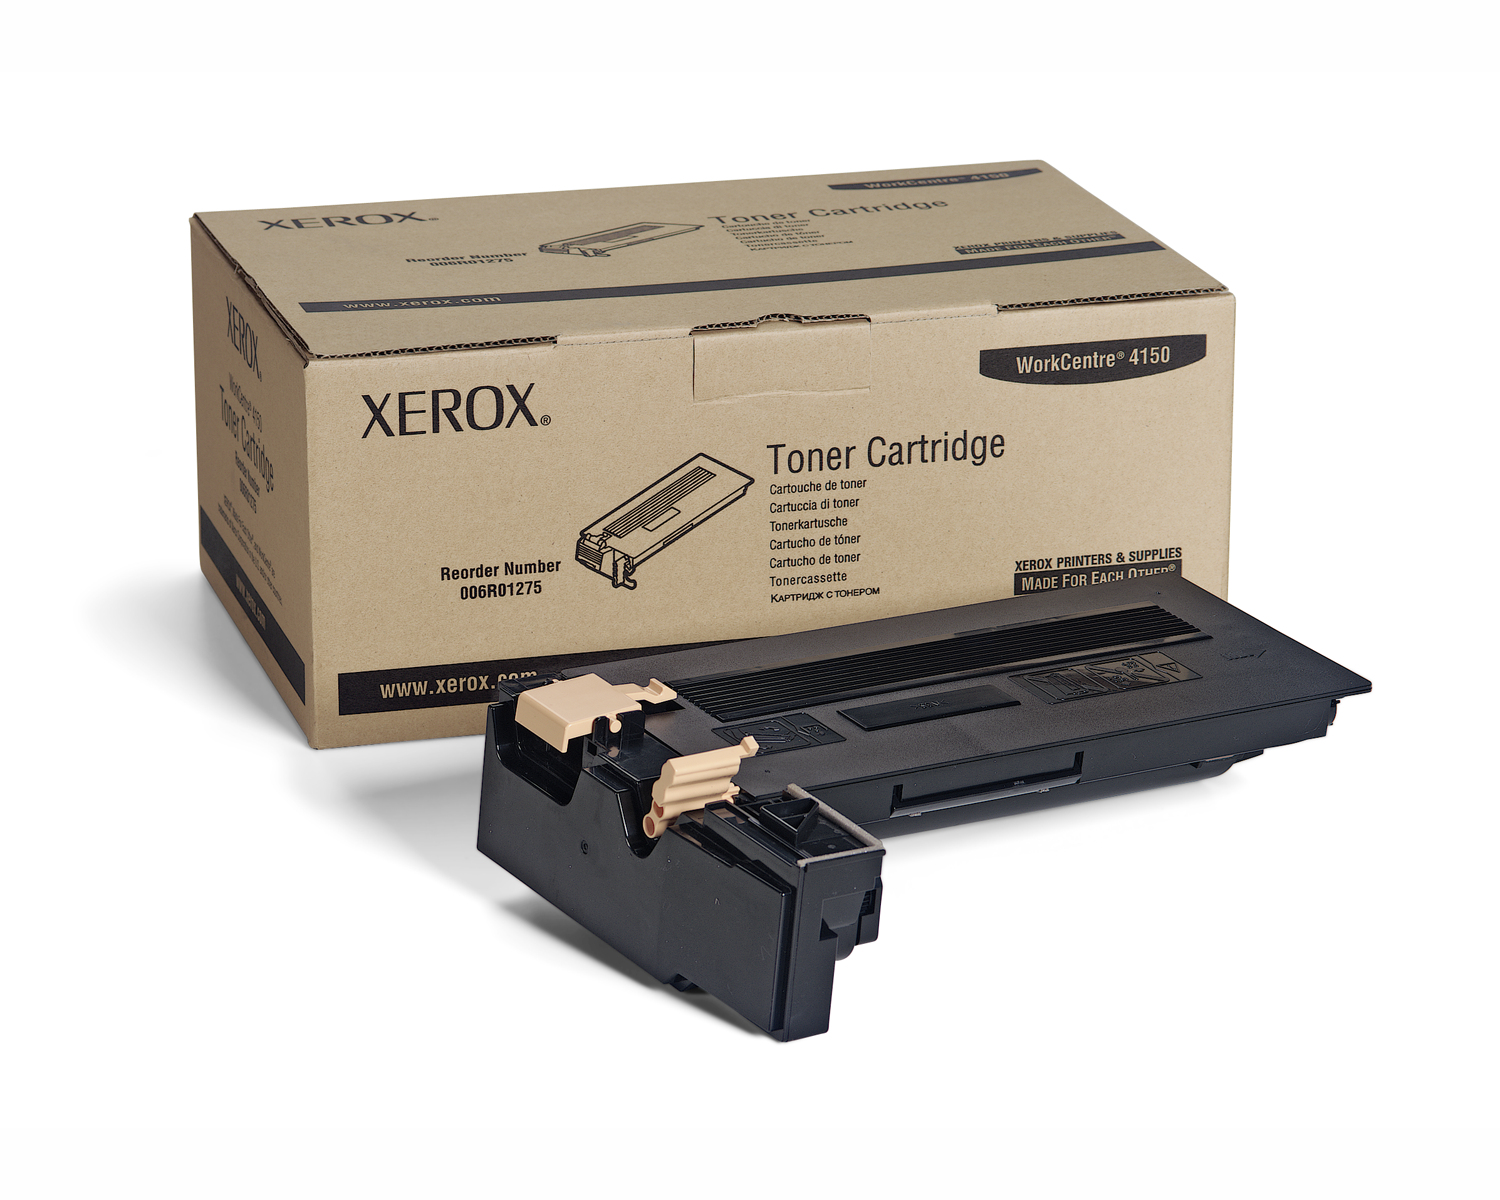 Xerox workcentre 4150 tonercartridge zwart standard capacity 20.000 pagina s 1-pack